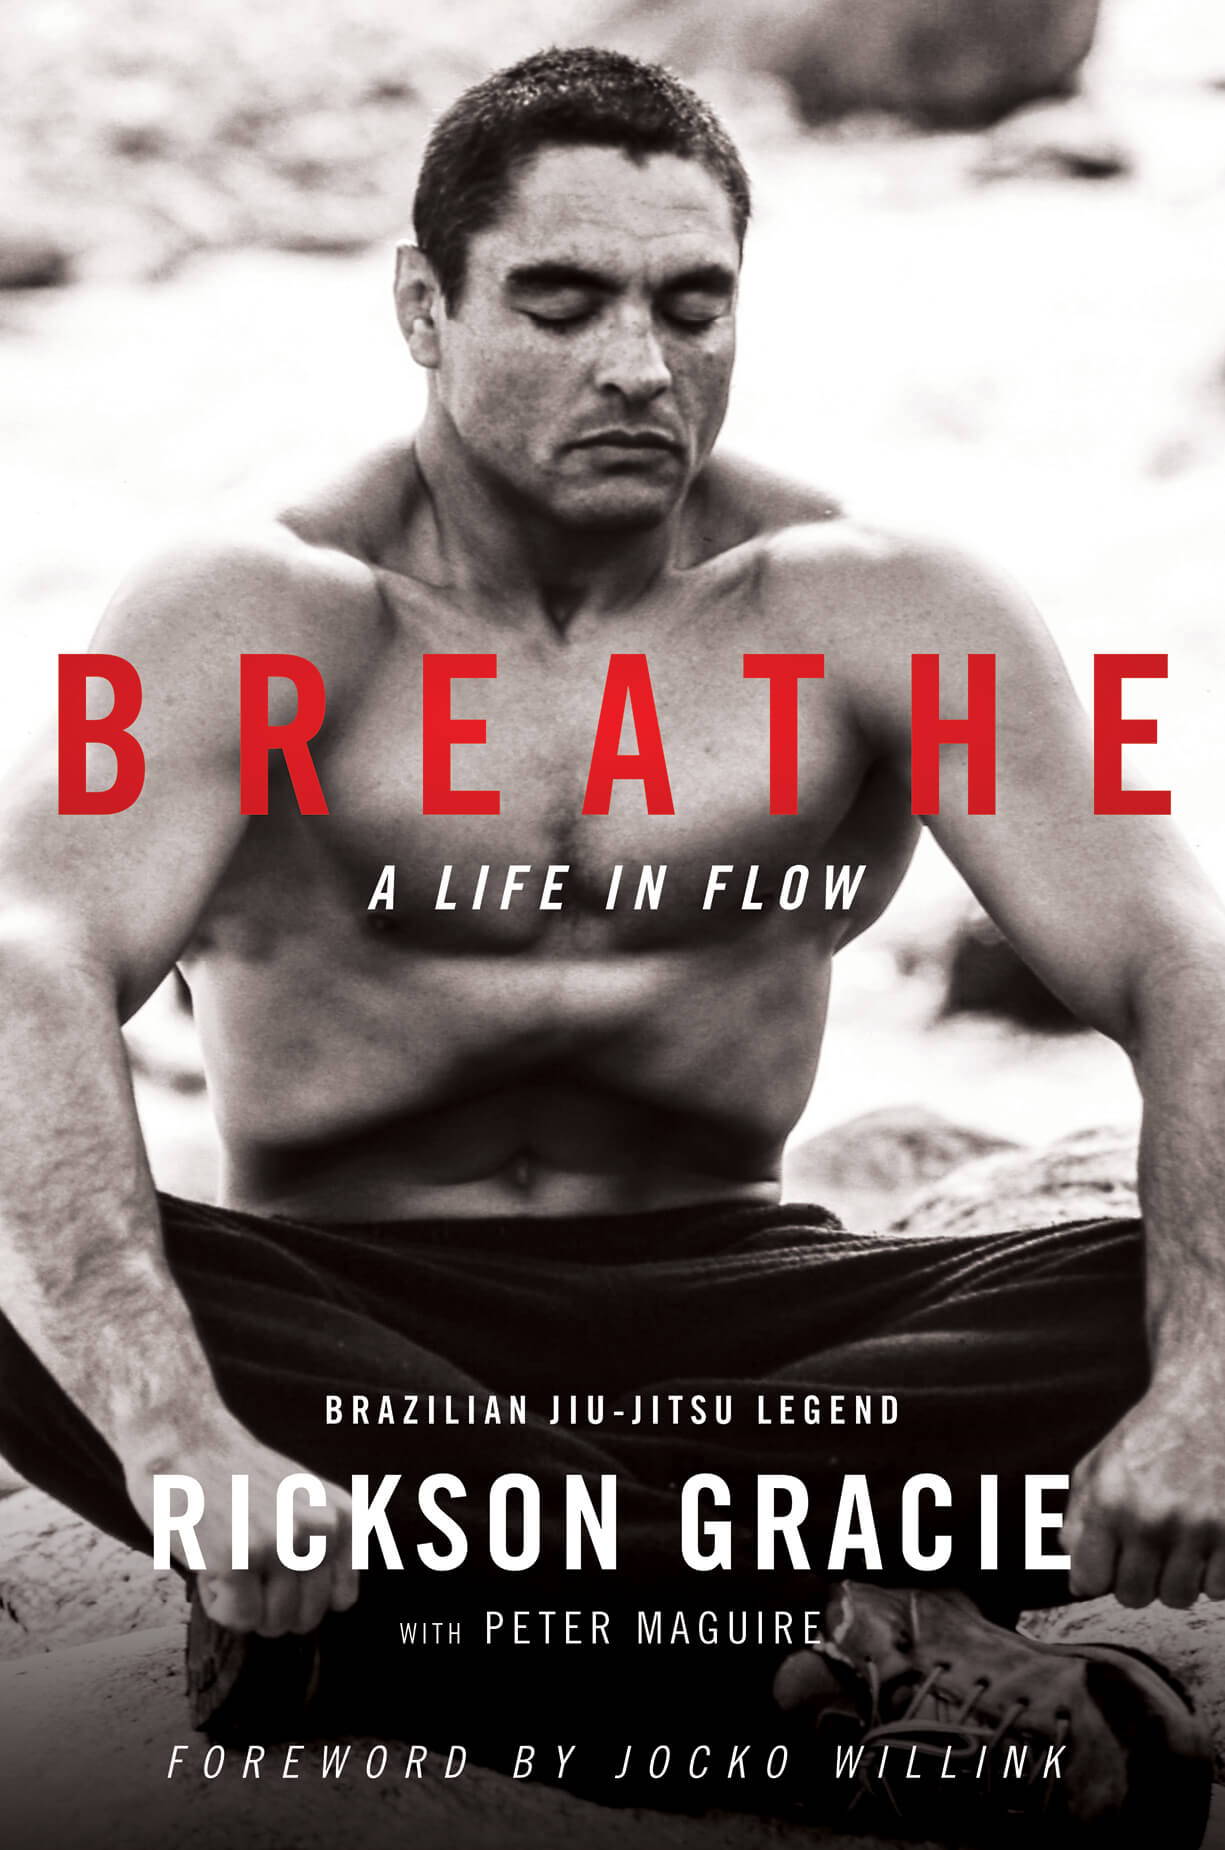 Rickson Gracie will realease a memoir called 'Breathe: A Life in